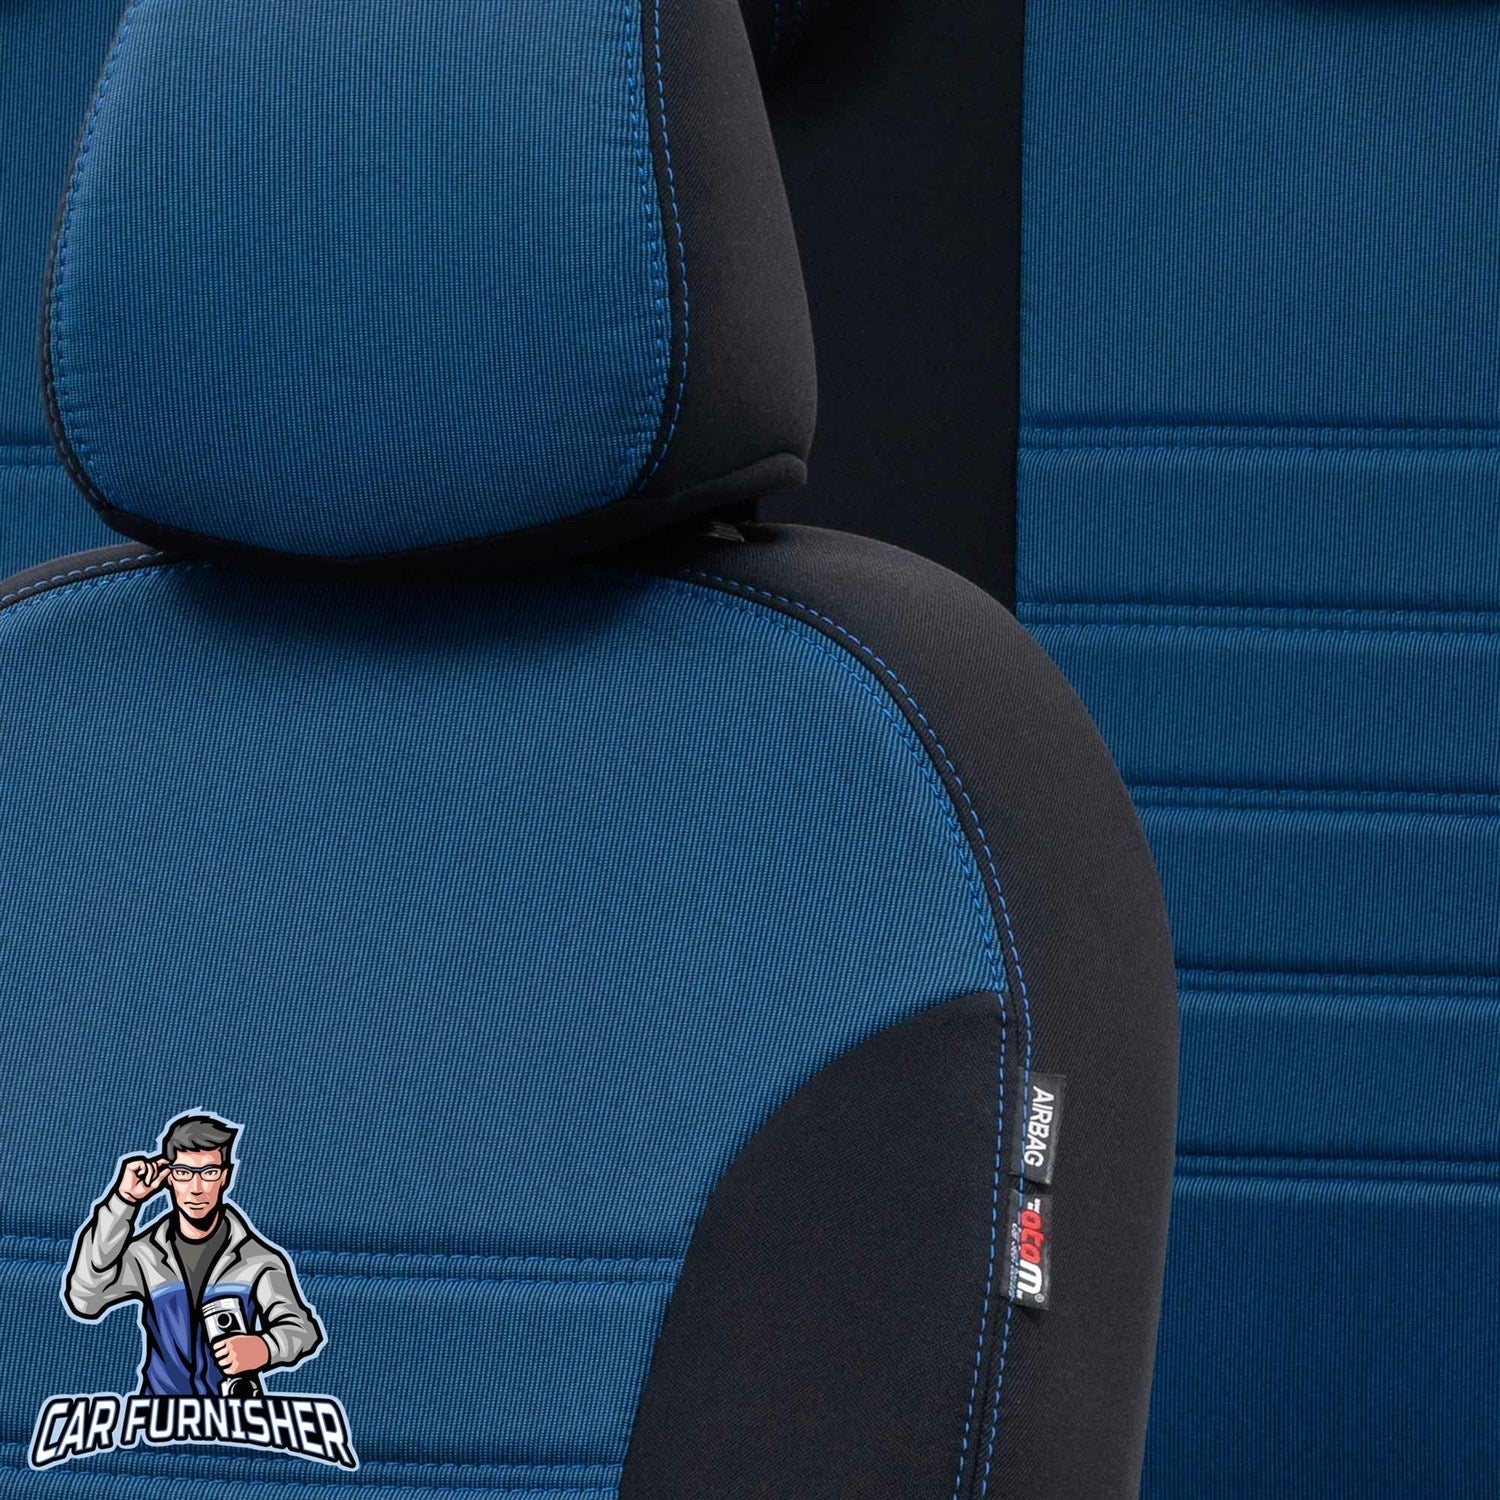 Chery Alia Seat Covers Original Jacquard Design Blue Jacquard Fabric